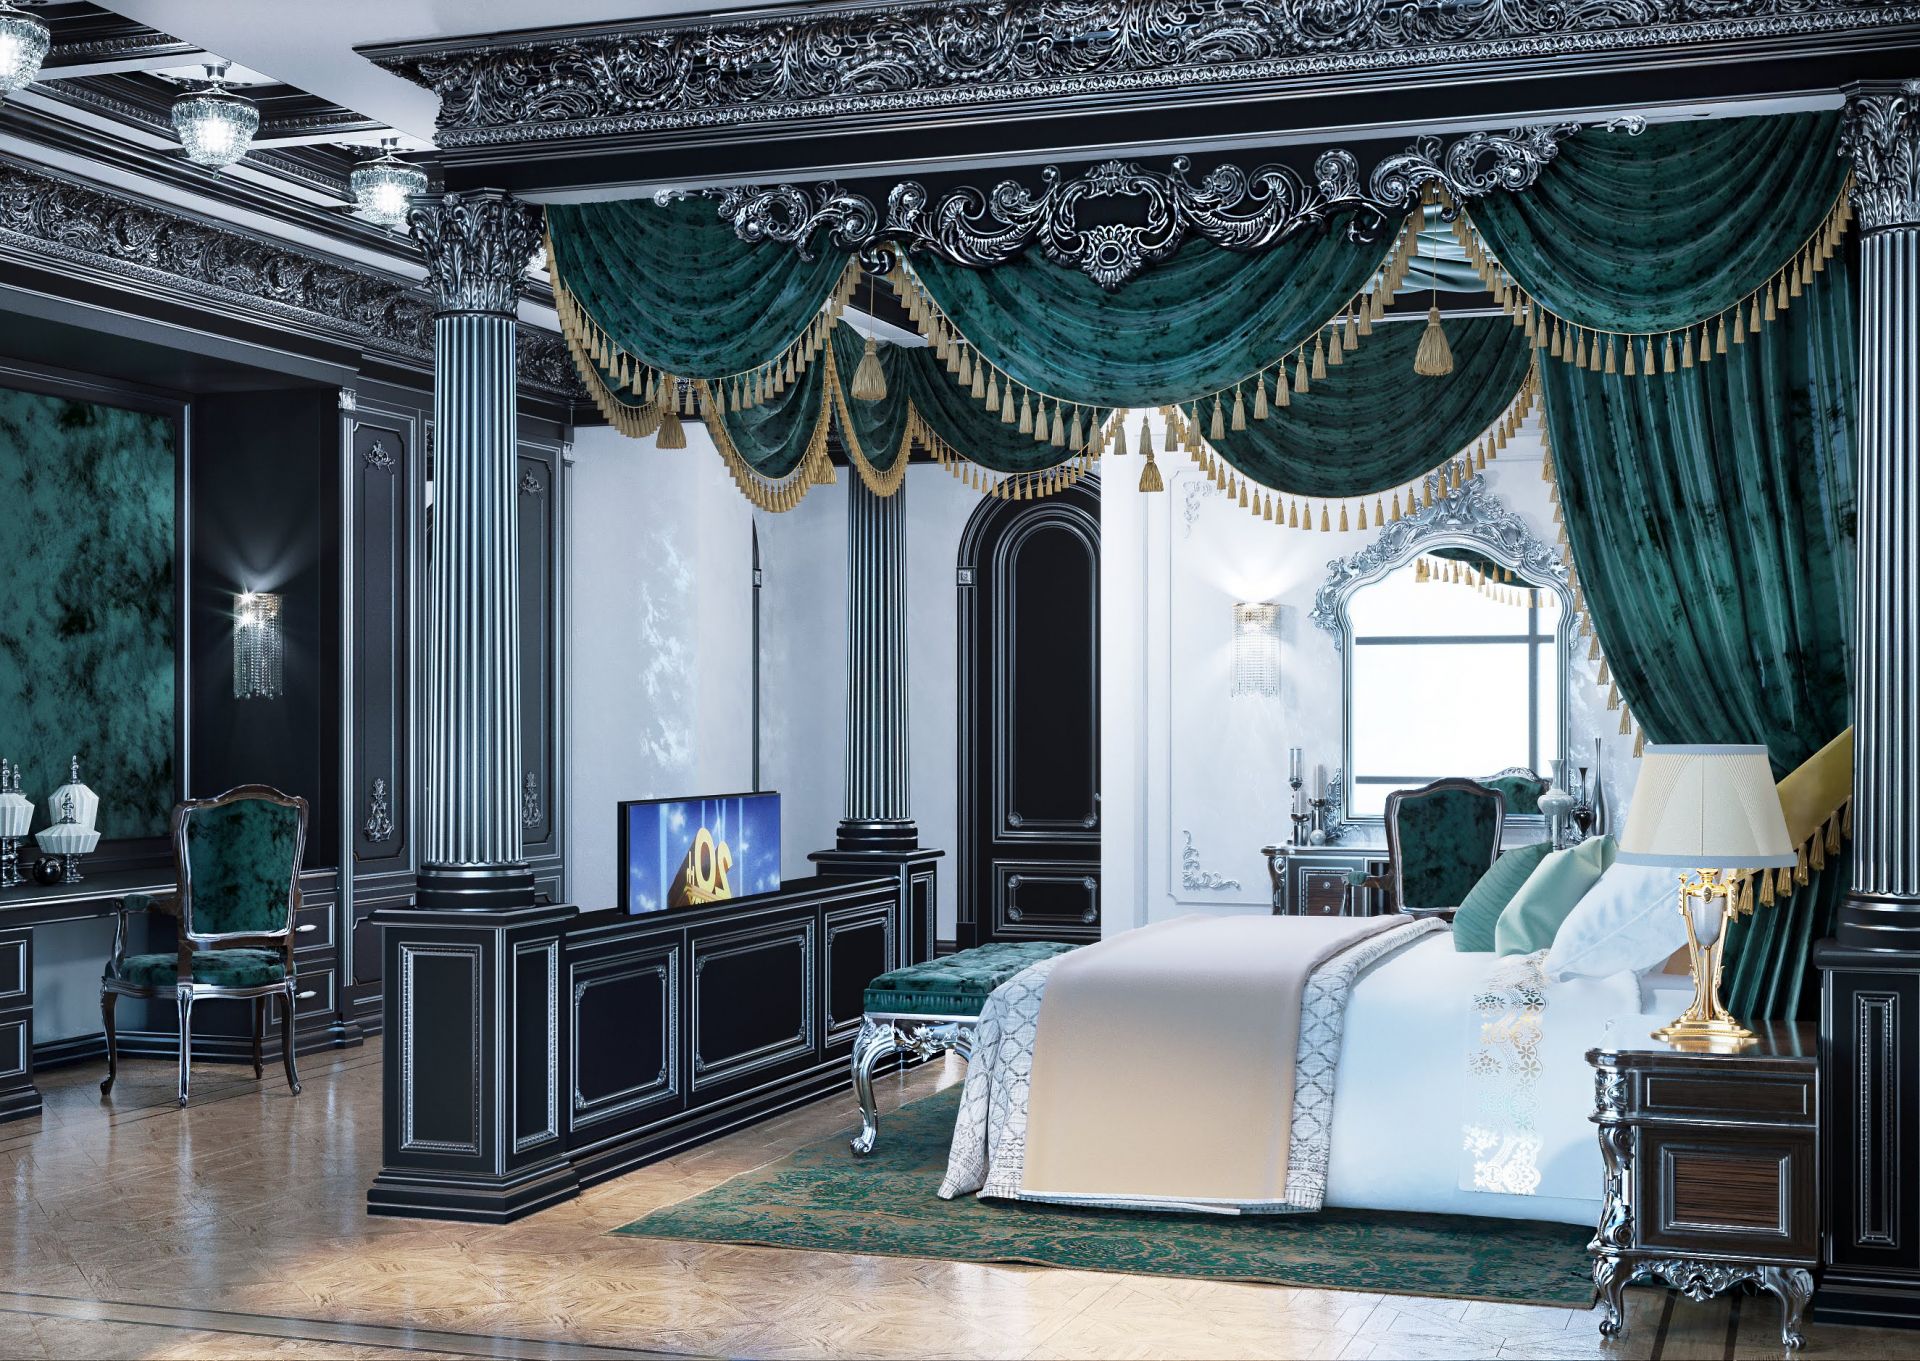 Royal bedroom interior design